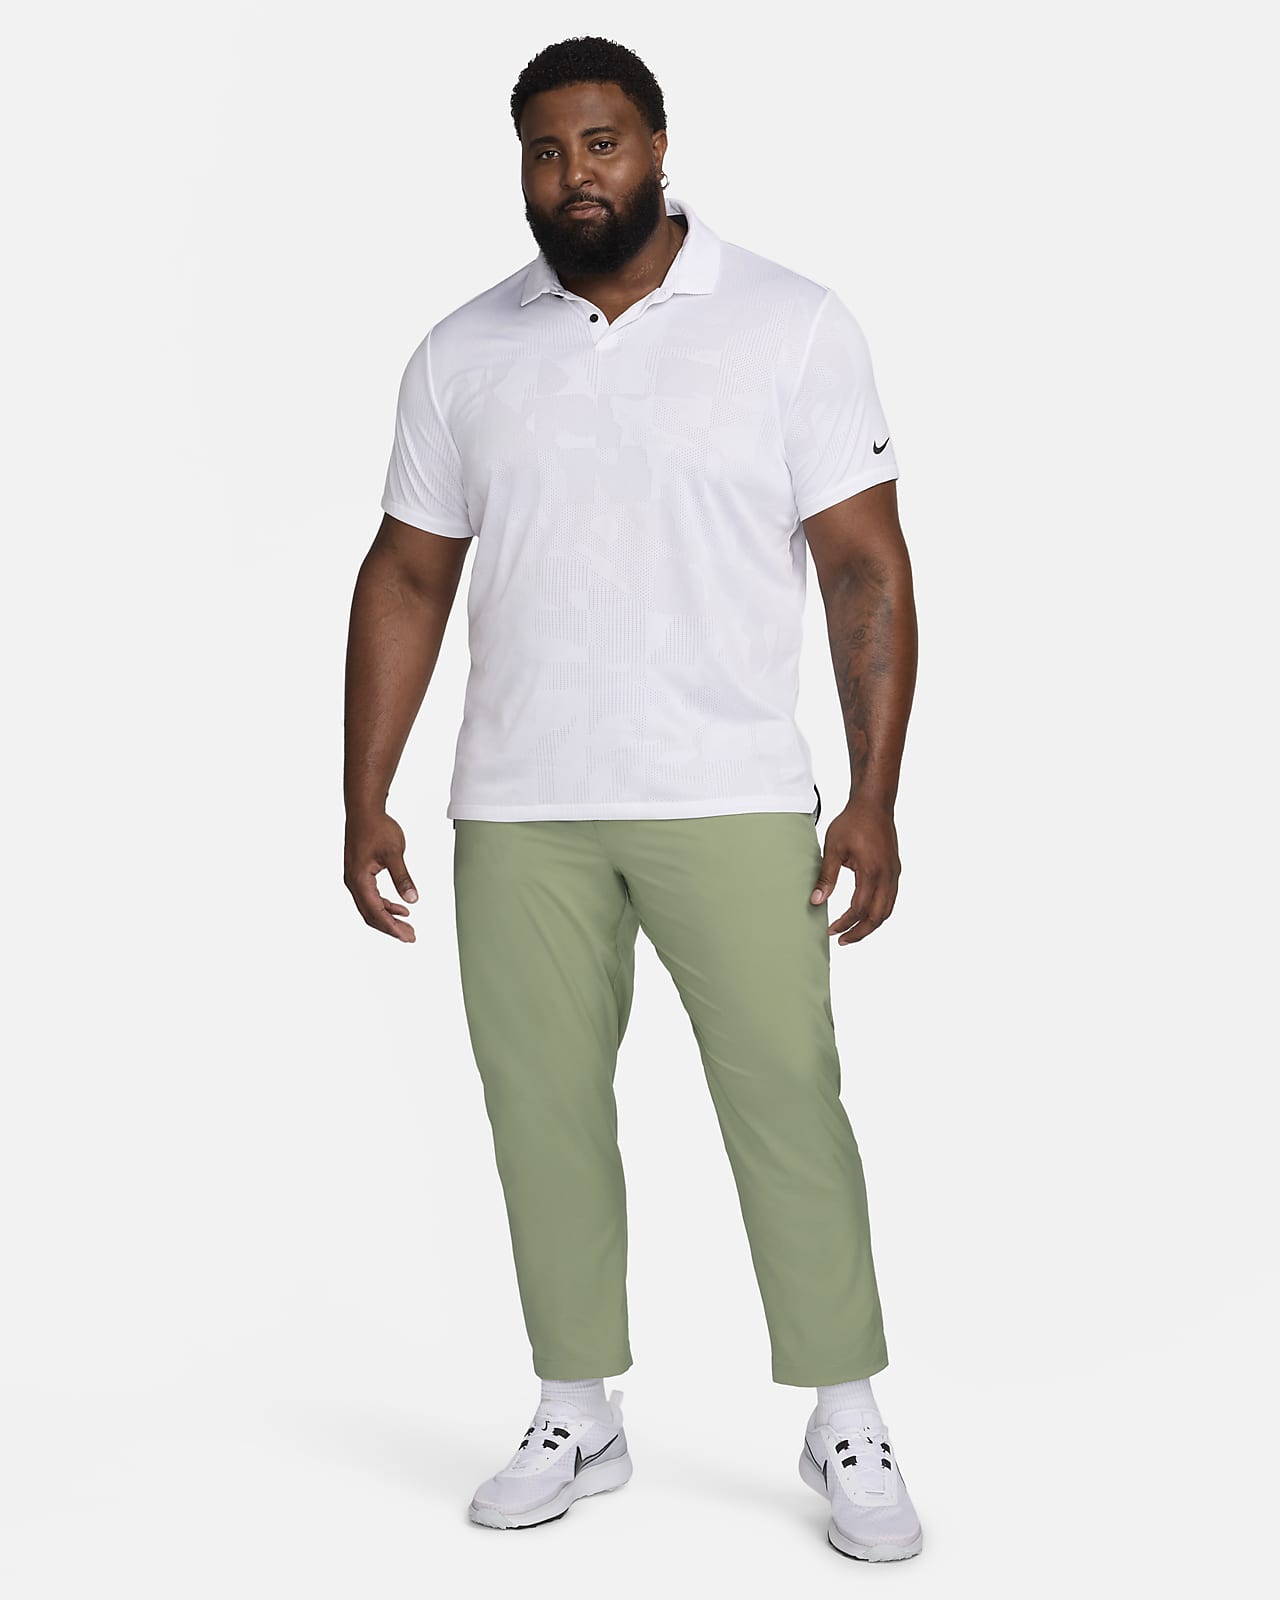 NEW $95 Nike Women's Size 14 Gray Dri-Fit Slim Fit Golf Pants Style 725716